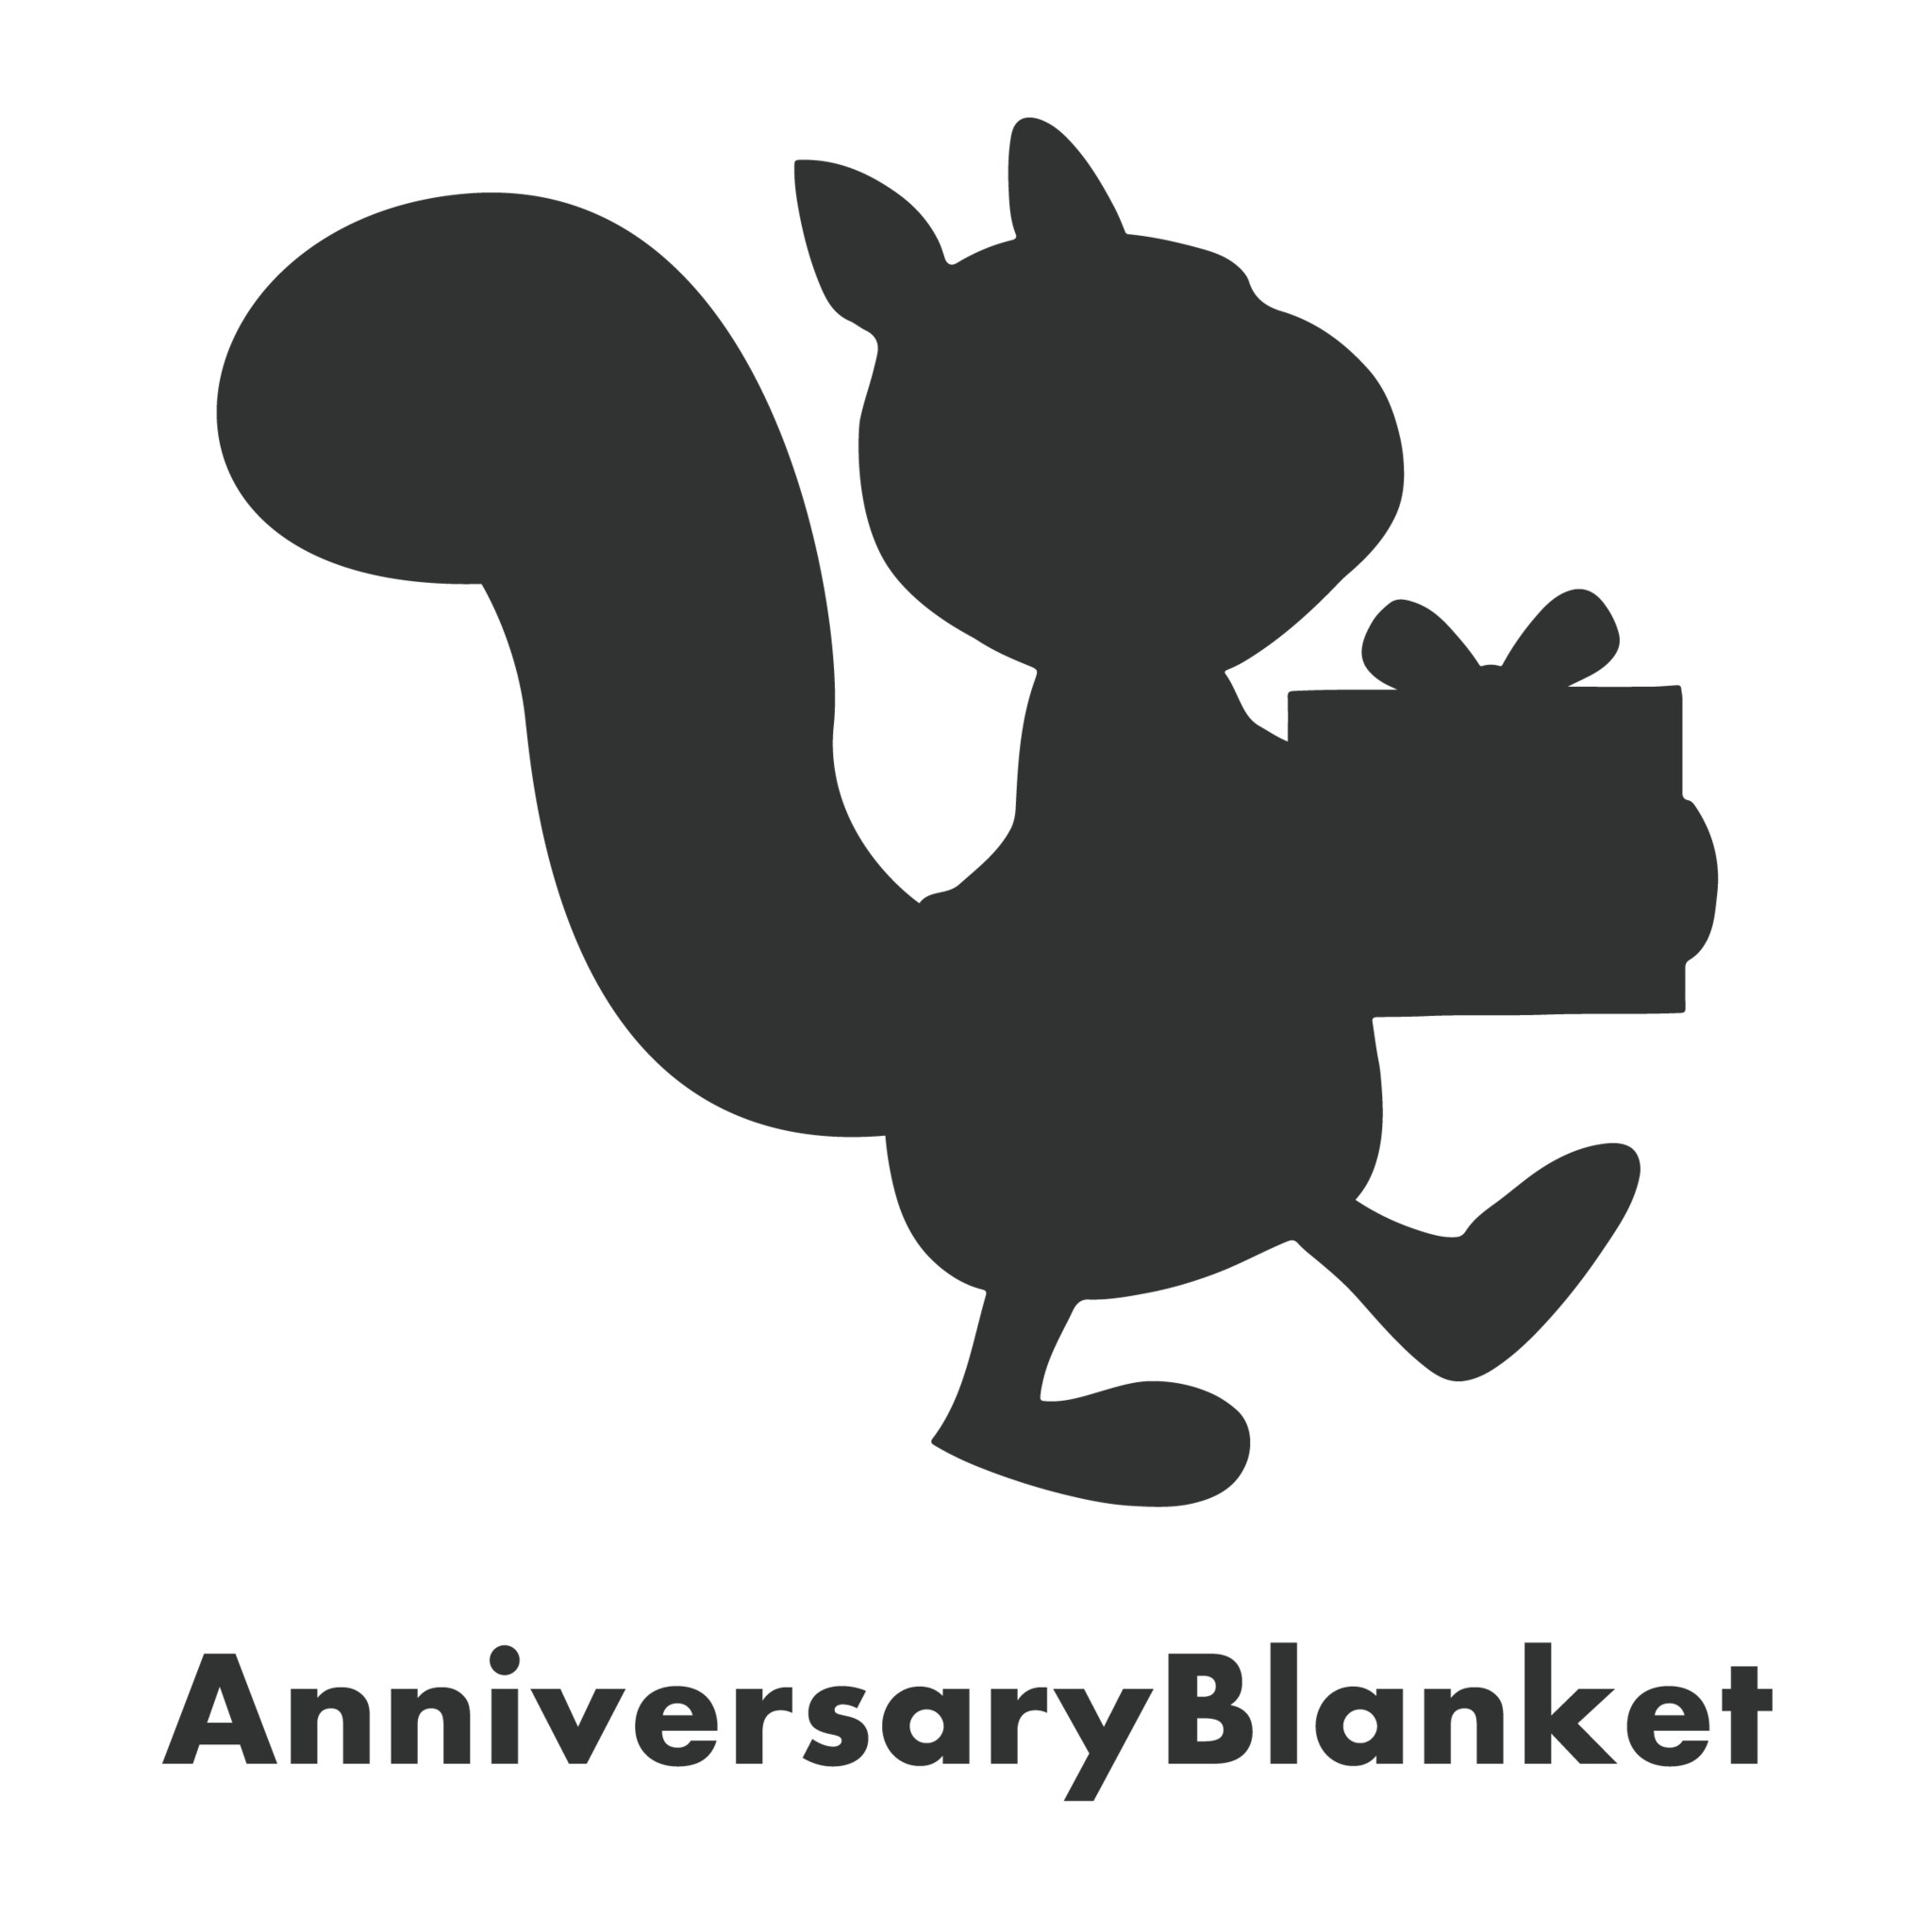 AnniversaryBlanket